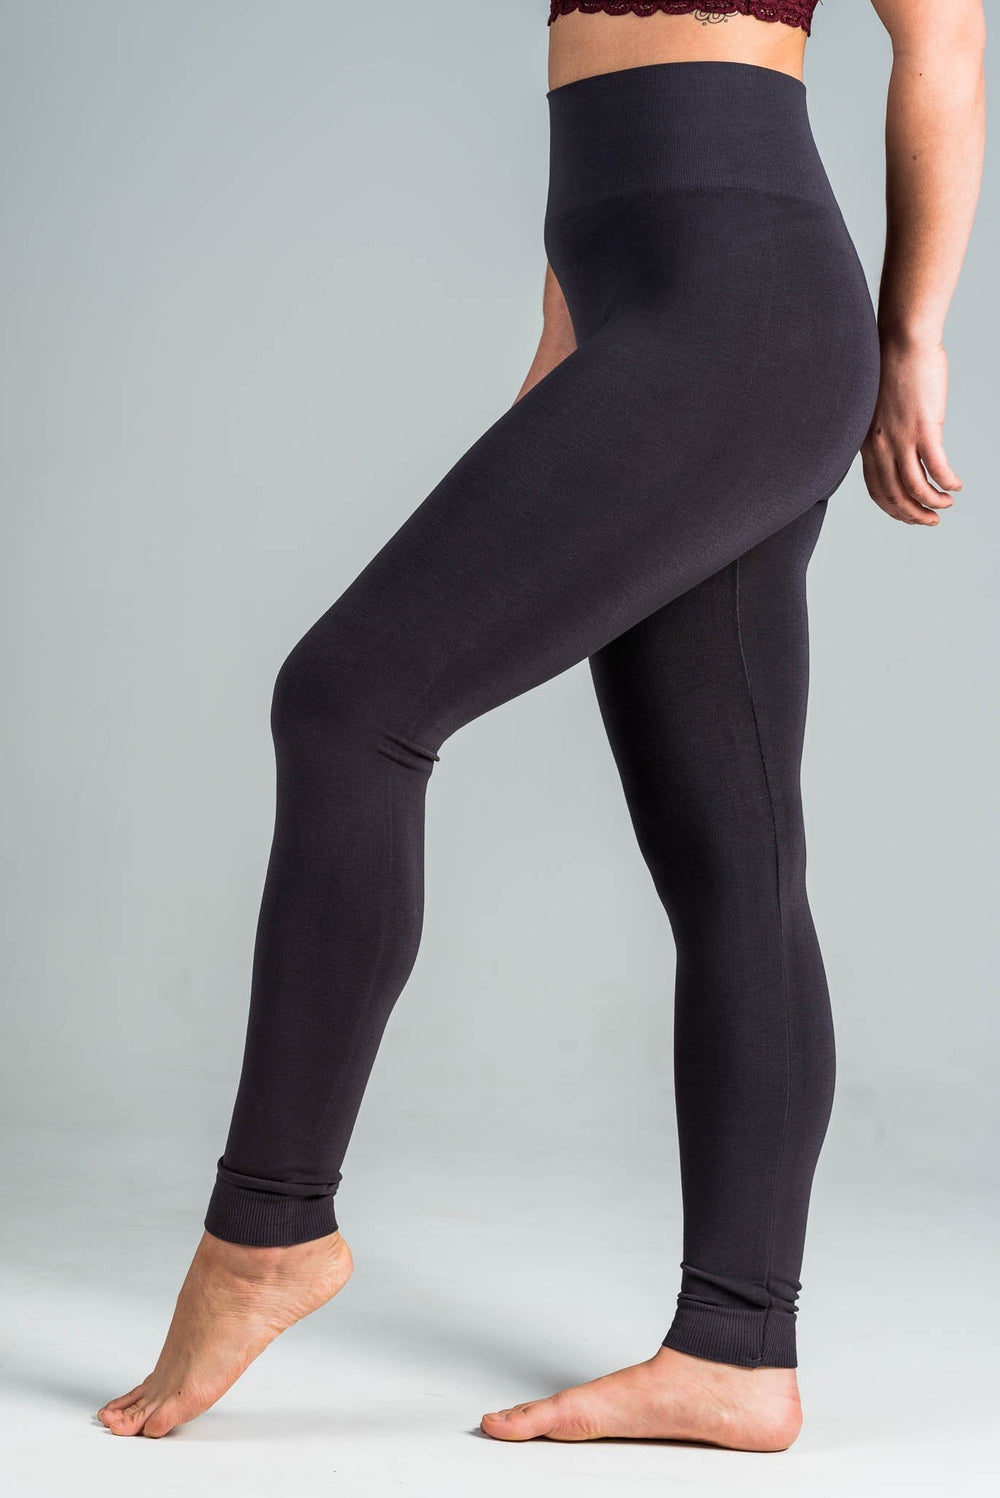 Indyeva Perna High Waist Legging – The Foursome & Boundary Clothing